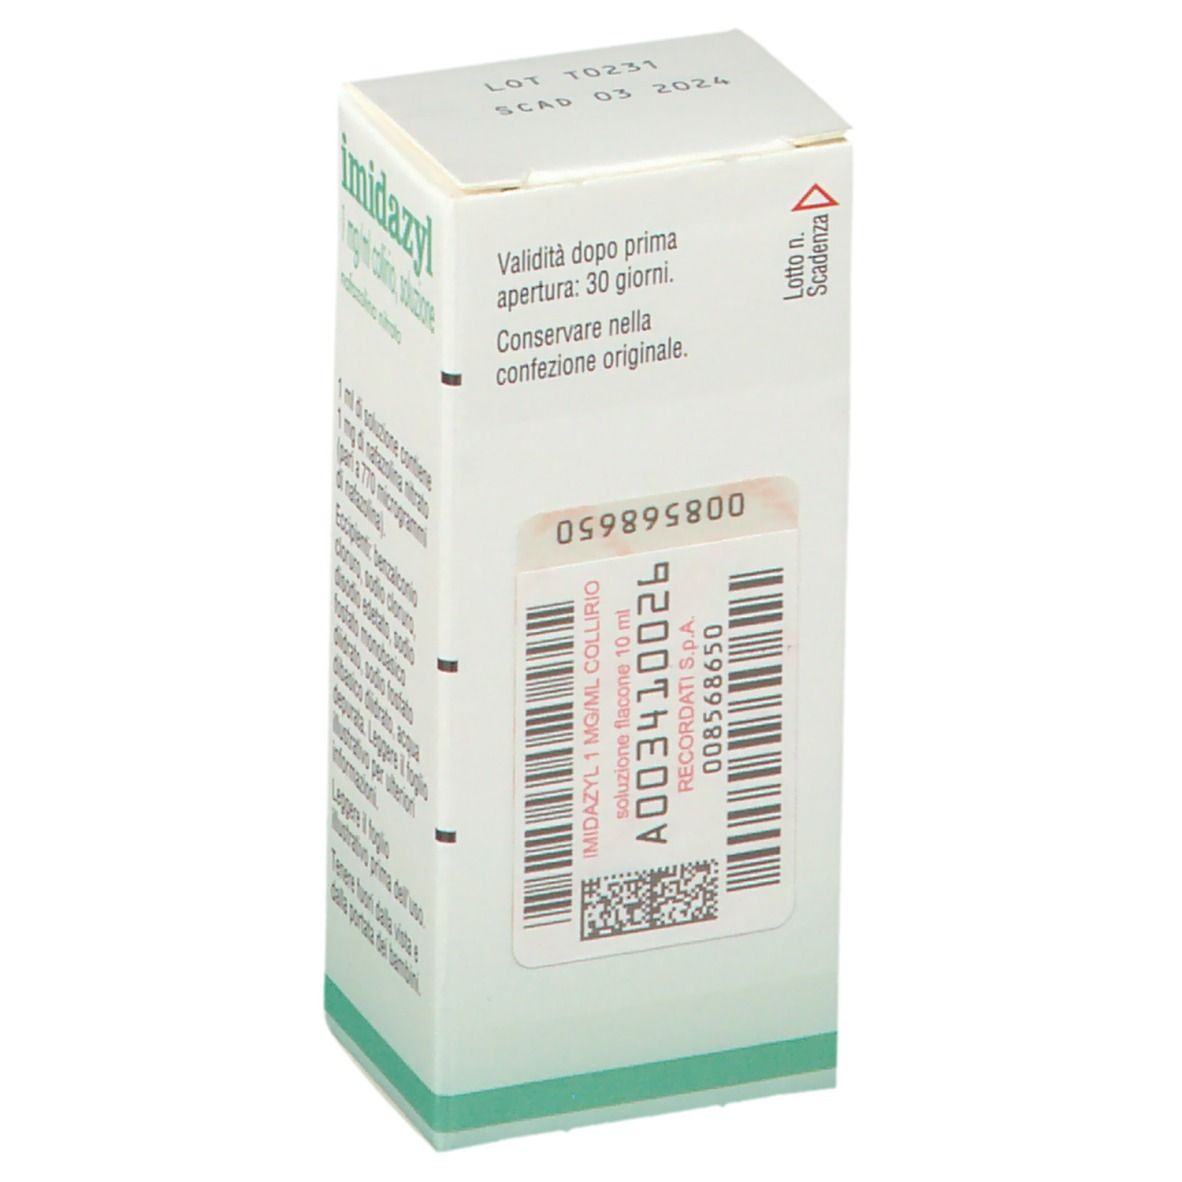 Imidazyl 1 mg/ml collirio Soluzione, Flacone